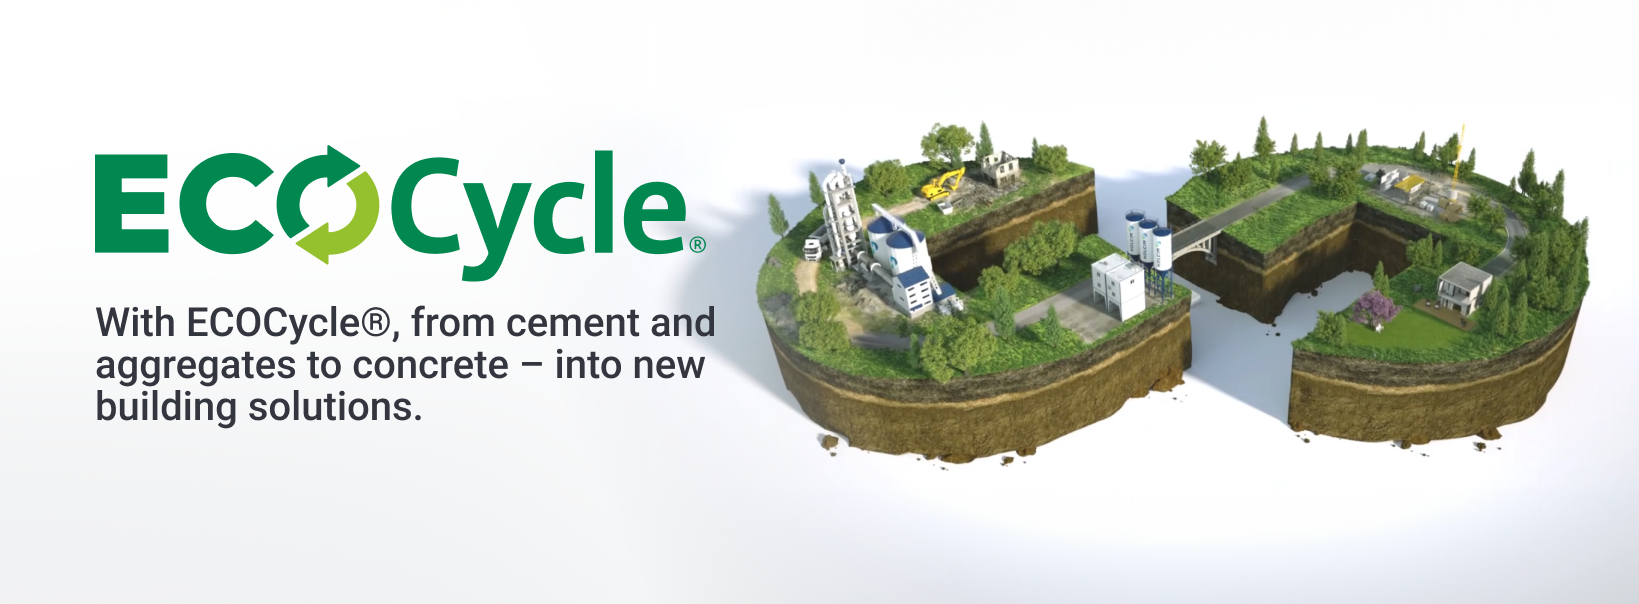 eco-cycle.png